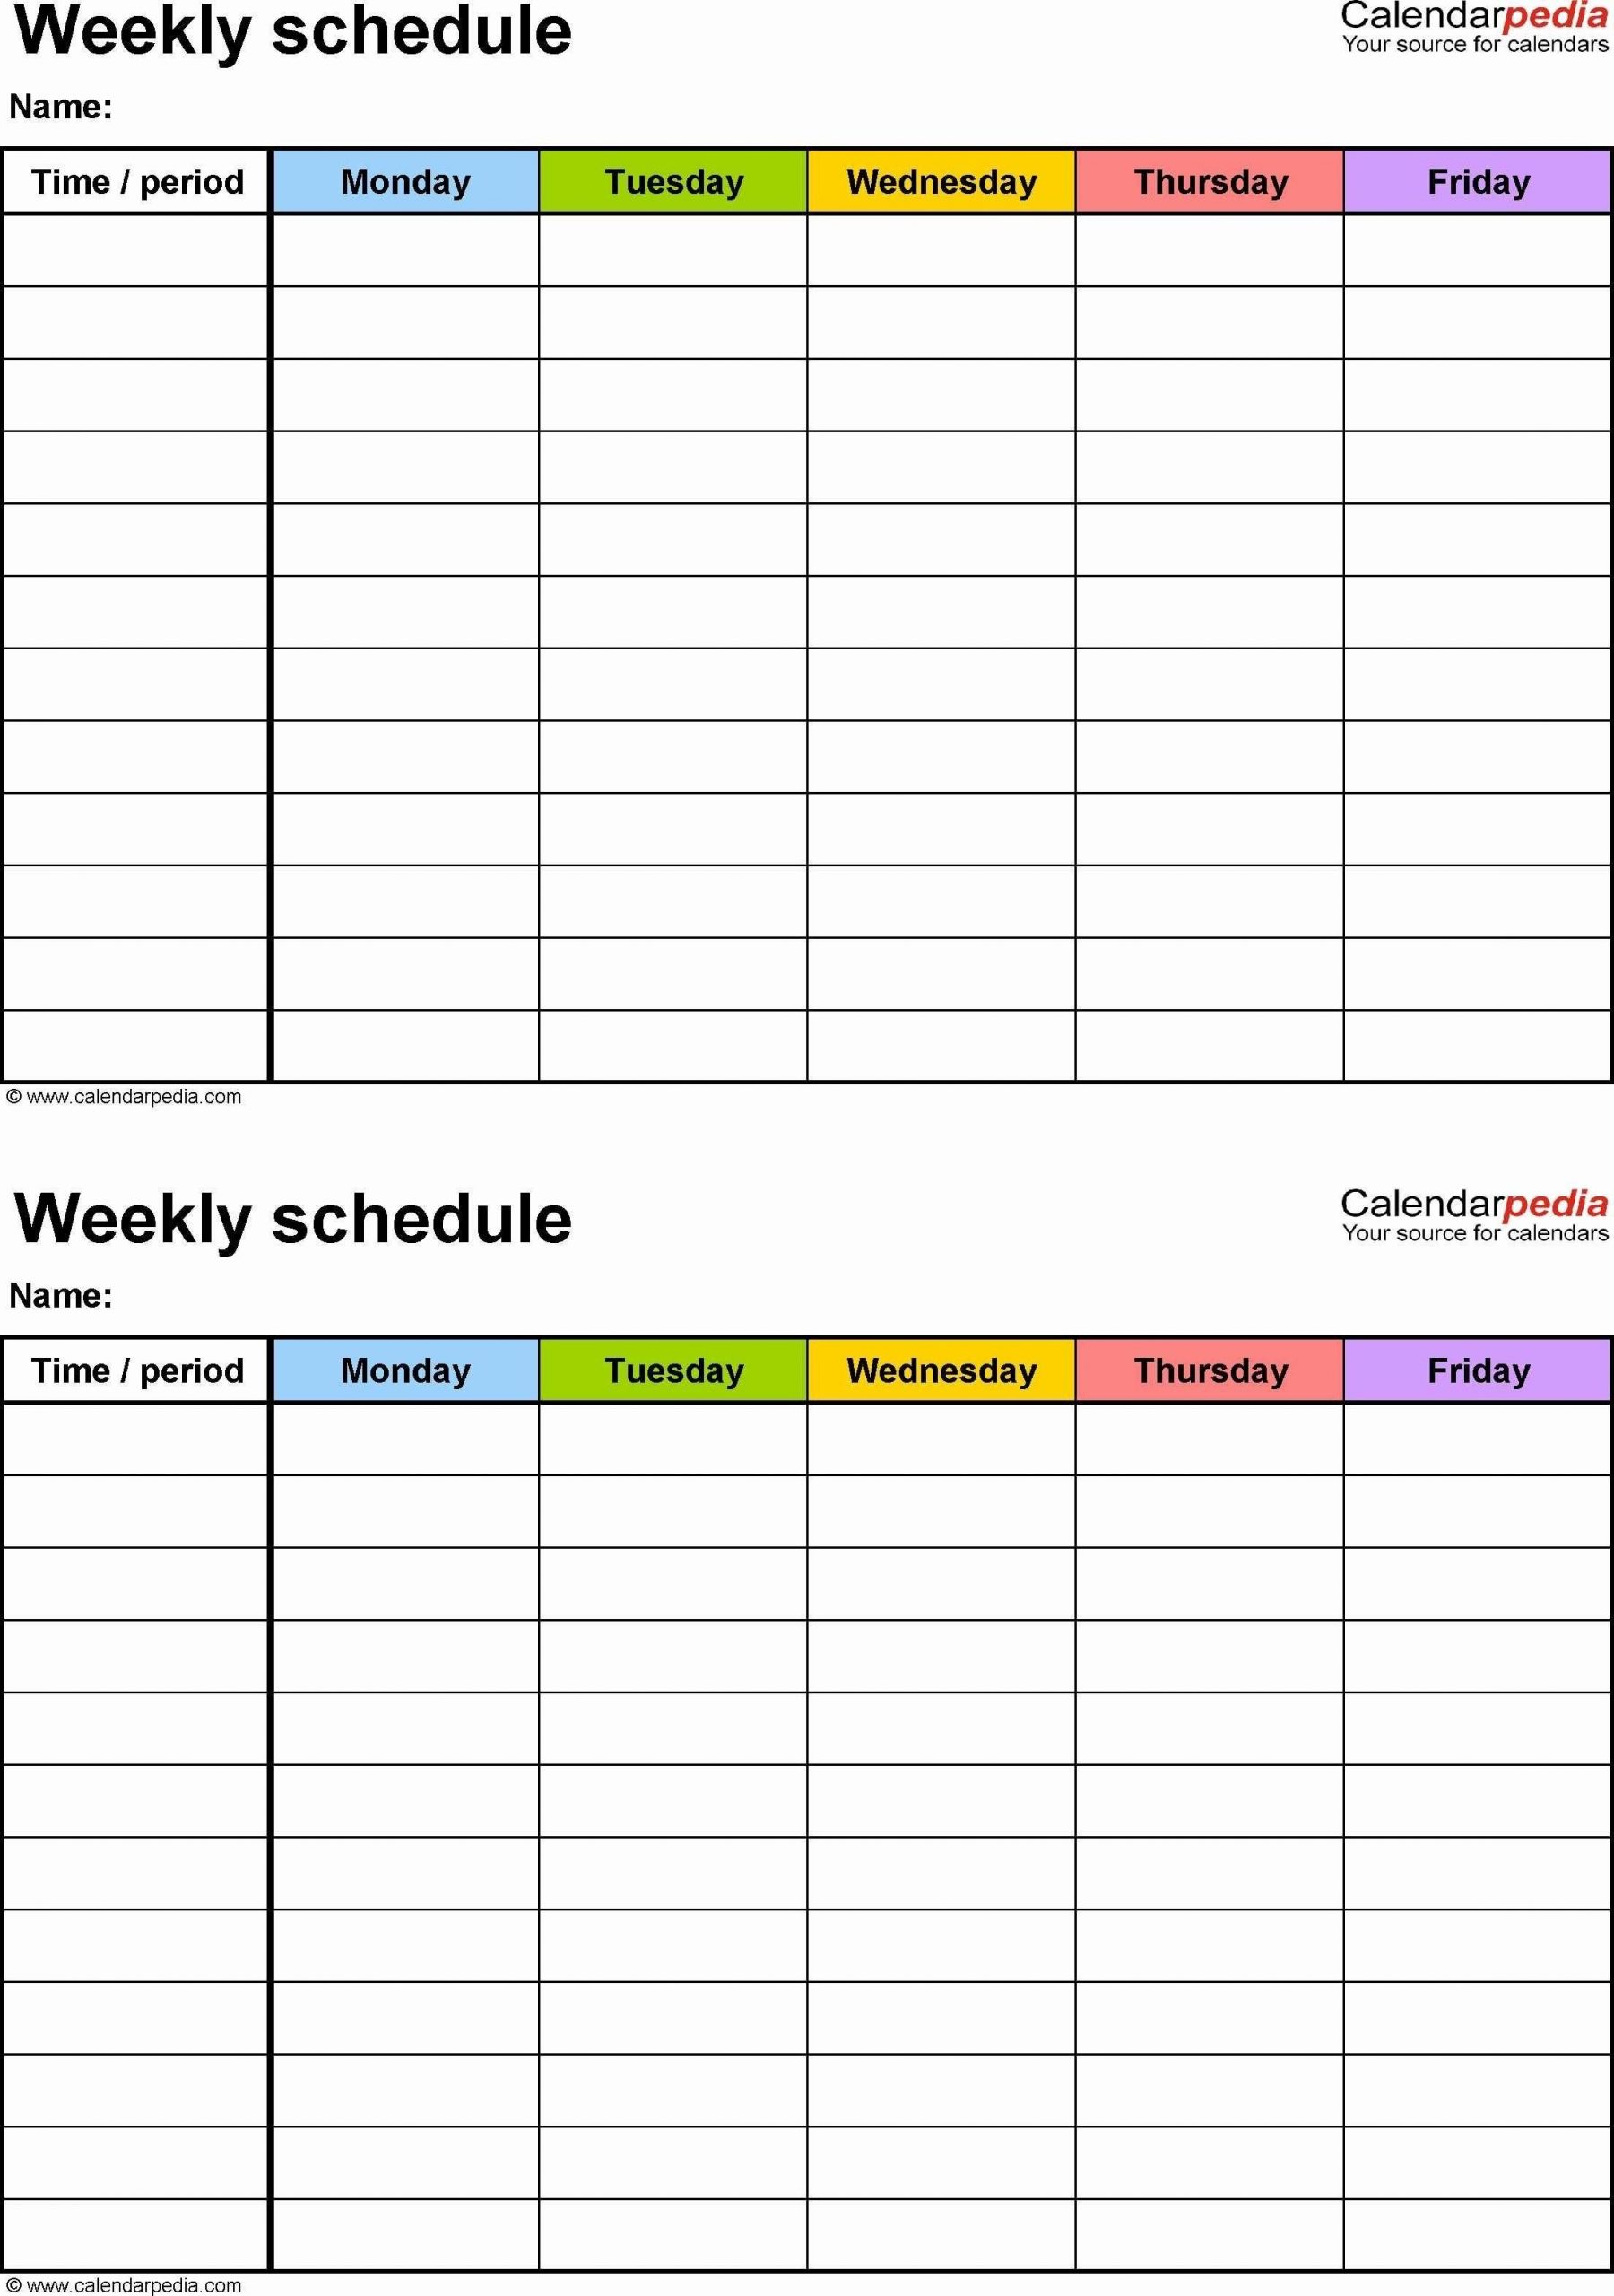 Calendarpedia - Free Download Printable Calendar Templates-Shift Calendar 2021 Free